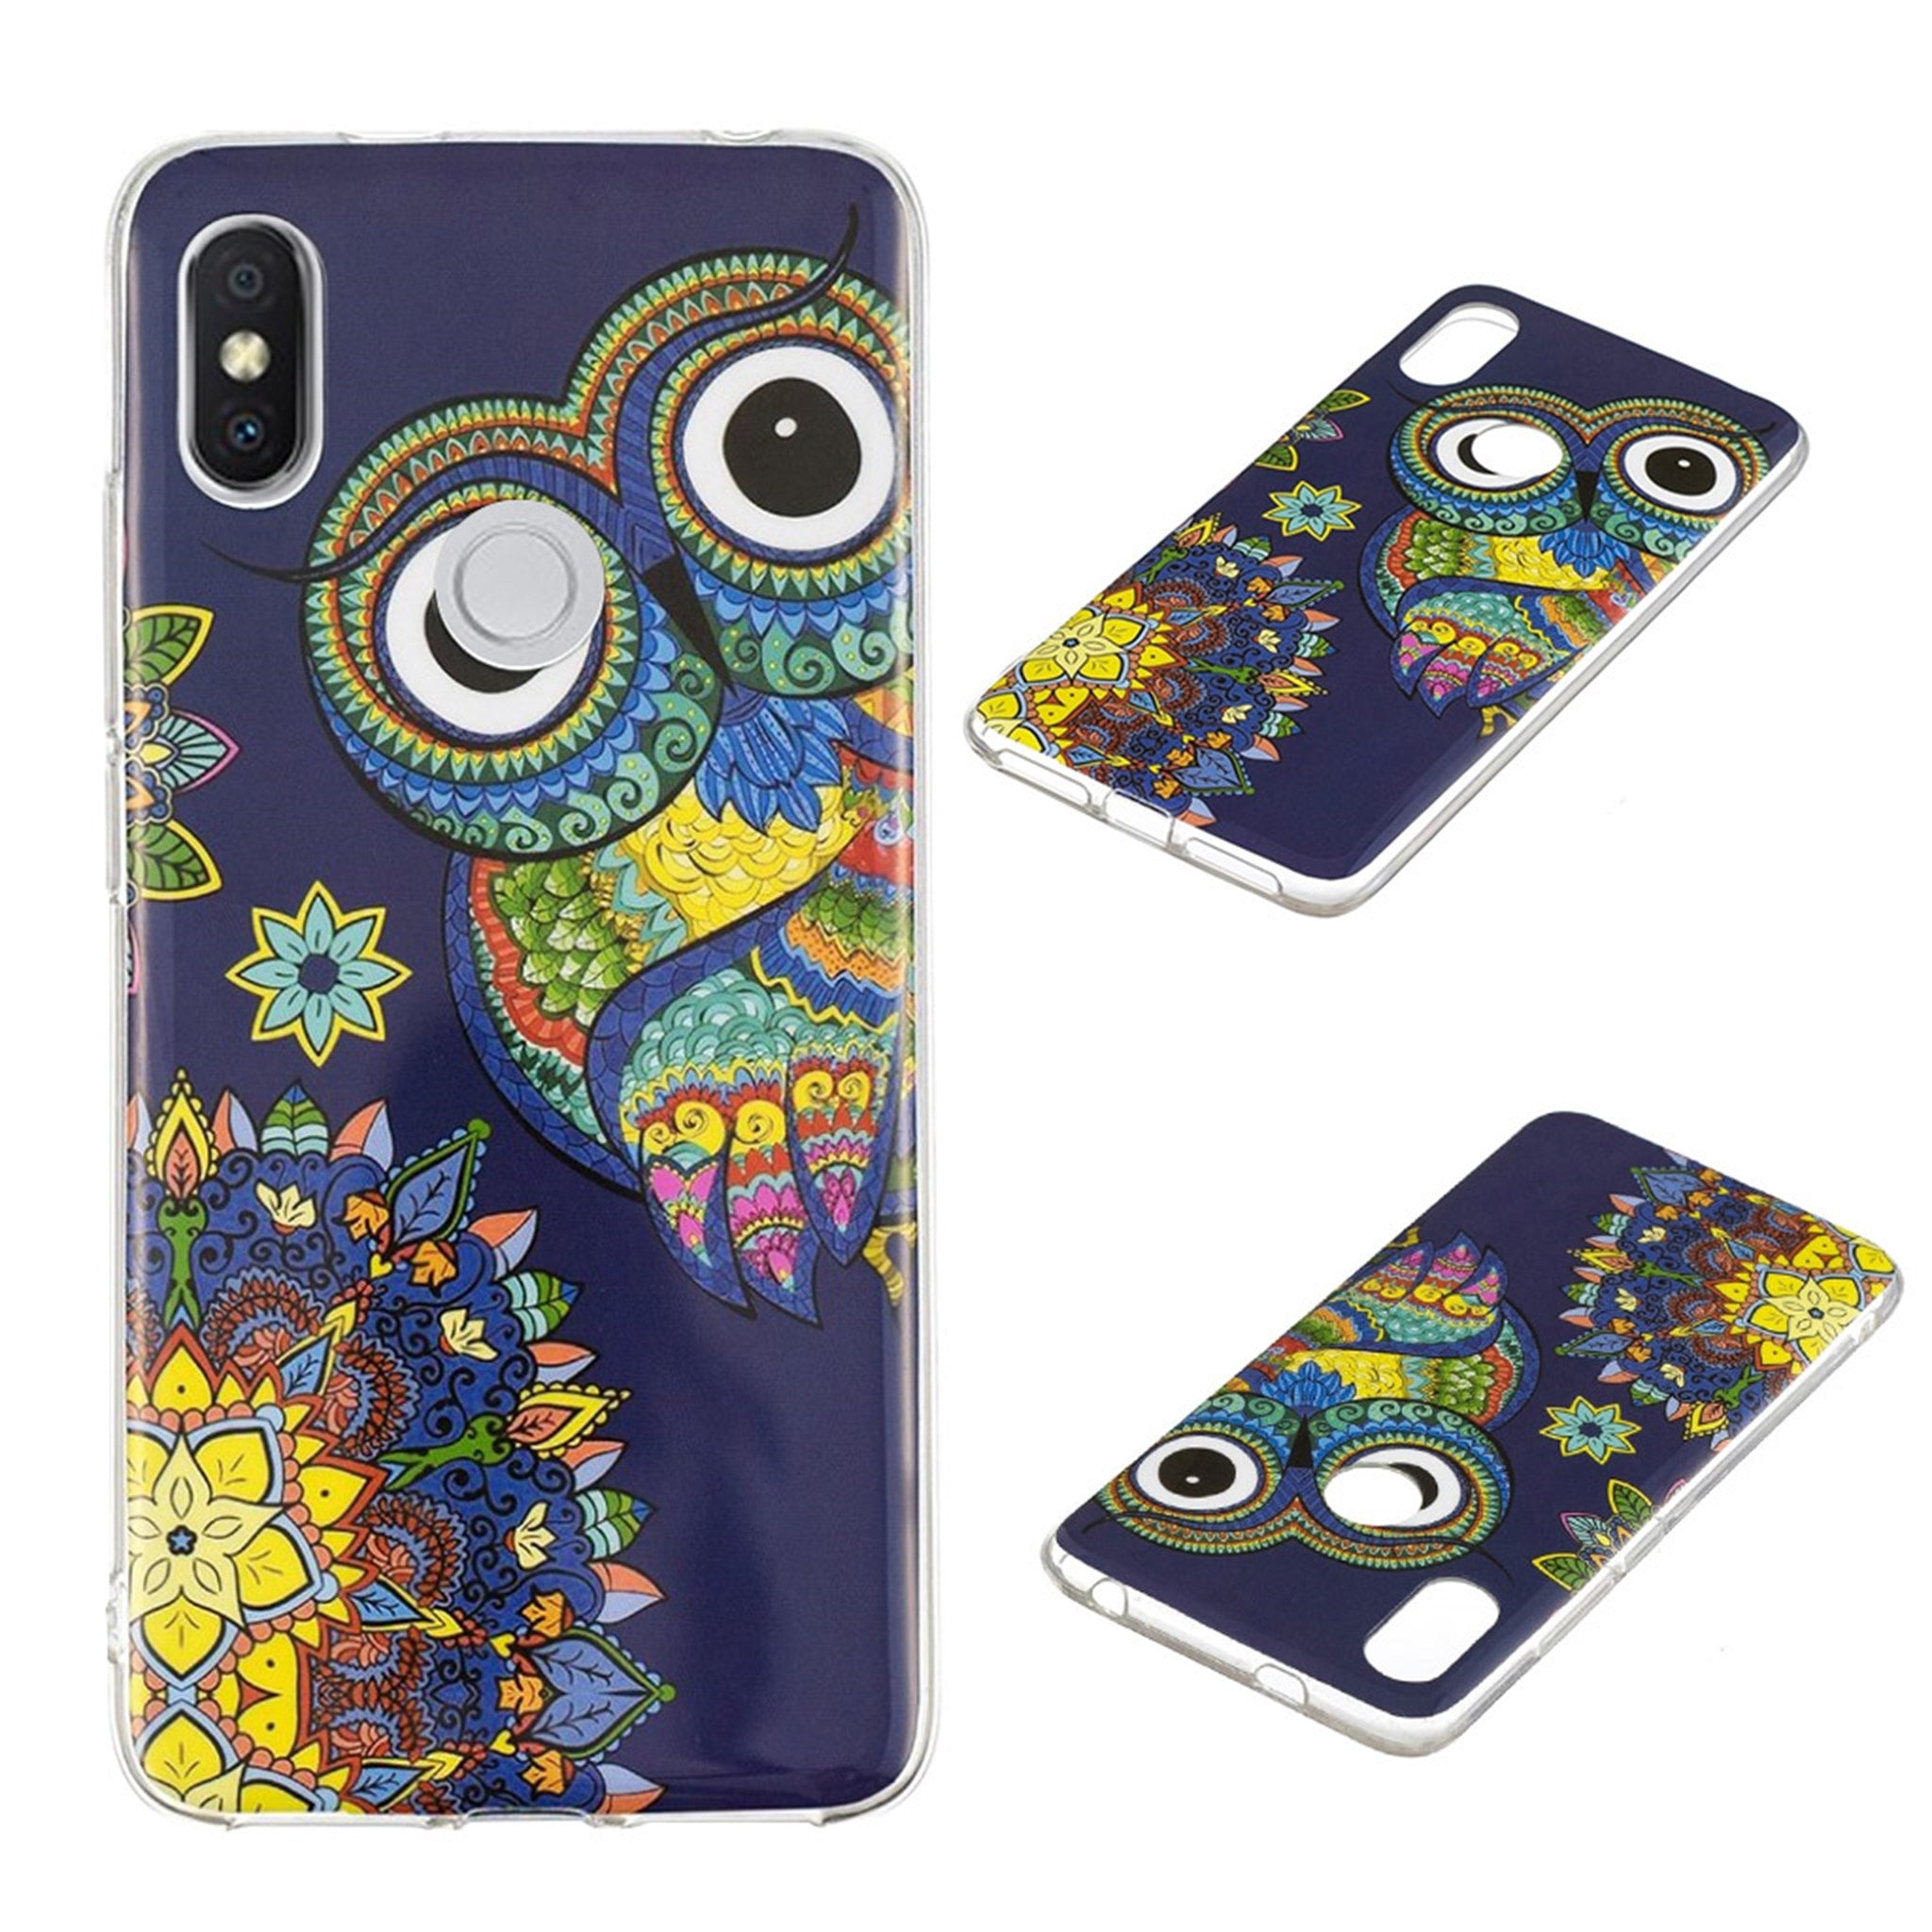 Xiaomi Redmi S2 luminous pattern case - Colorized Owl